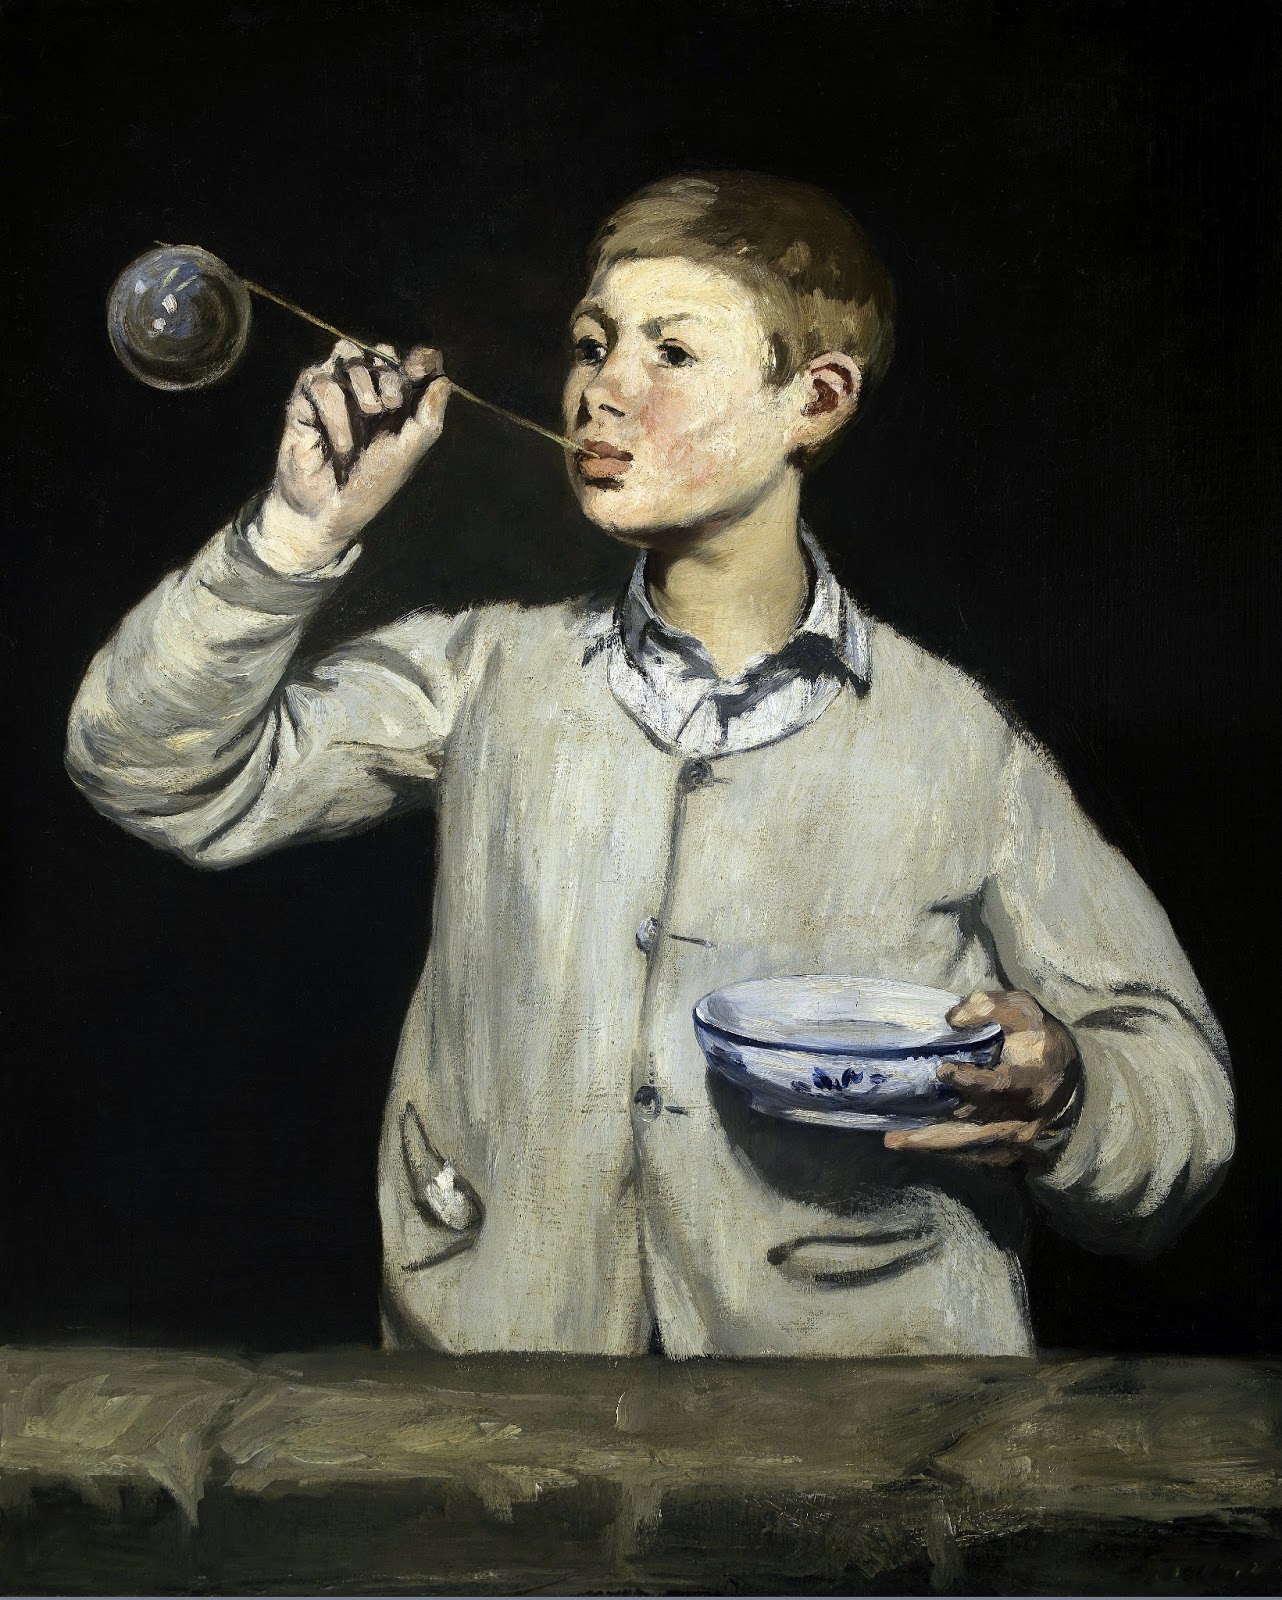 Edouard+Manet-1832-1883 (112).jpg